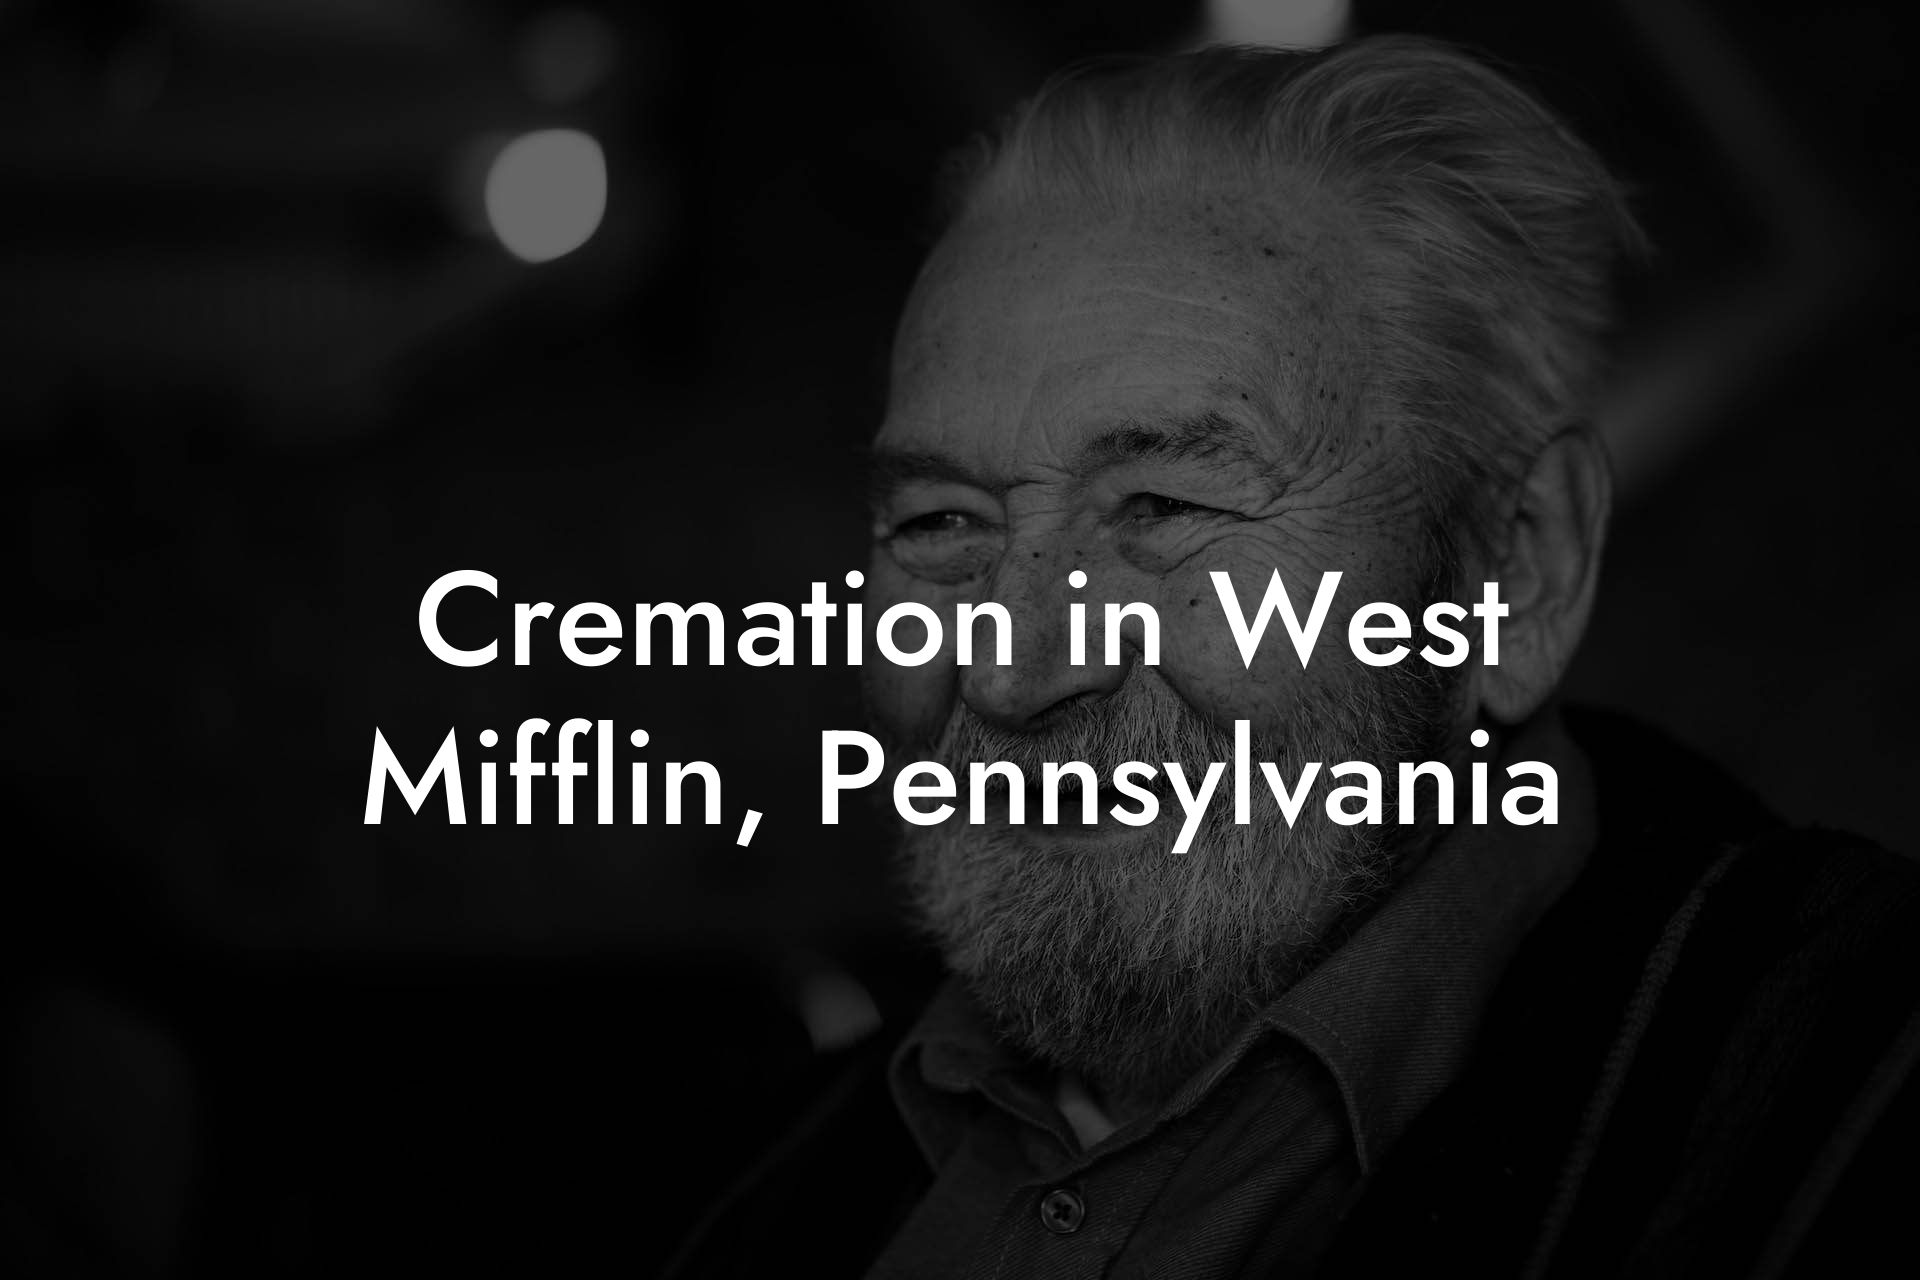 Cremation in West Mifflin, Pennsylvania